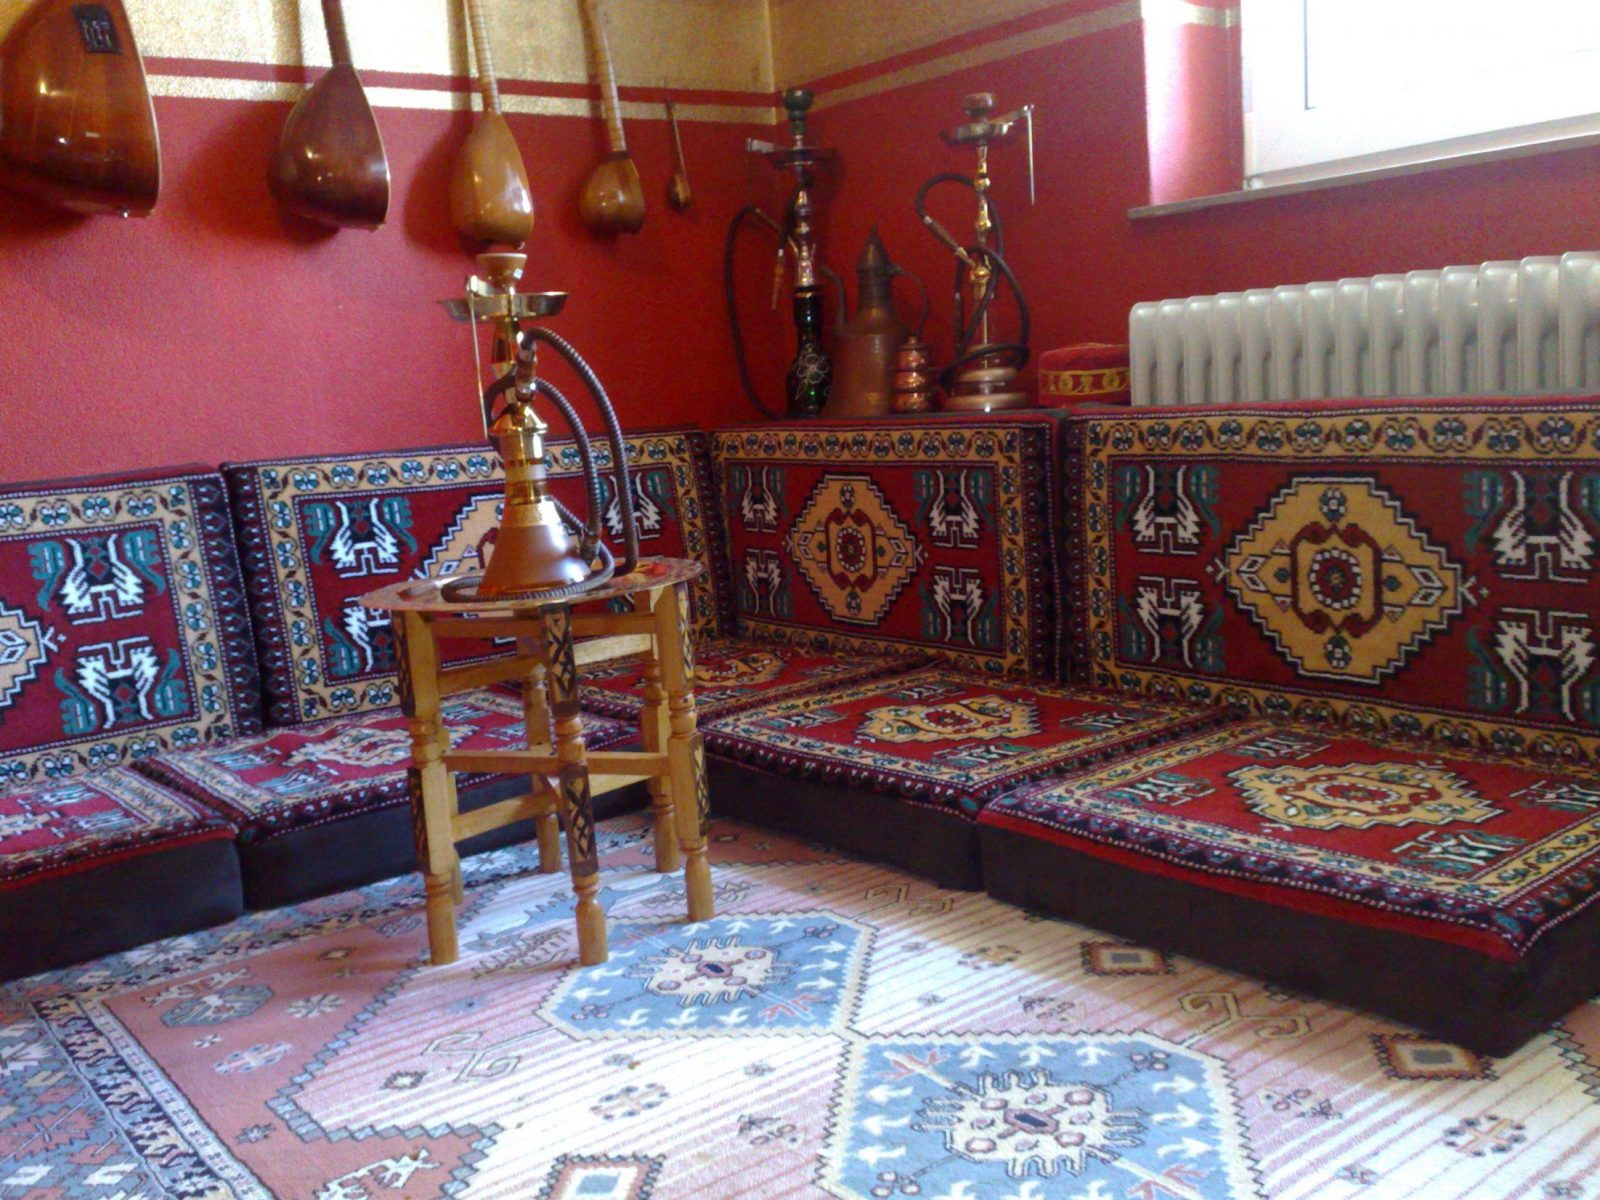 Orientalische Sitzecke Im Eigenen Heim  Hiiilfe  Shisha Forum von Orientalische Sitzecke Selber Bauen Bild